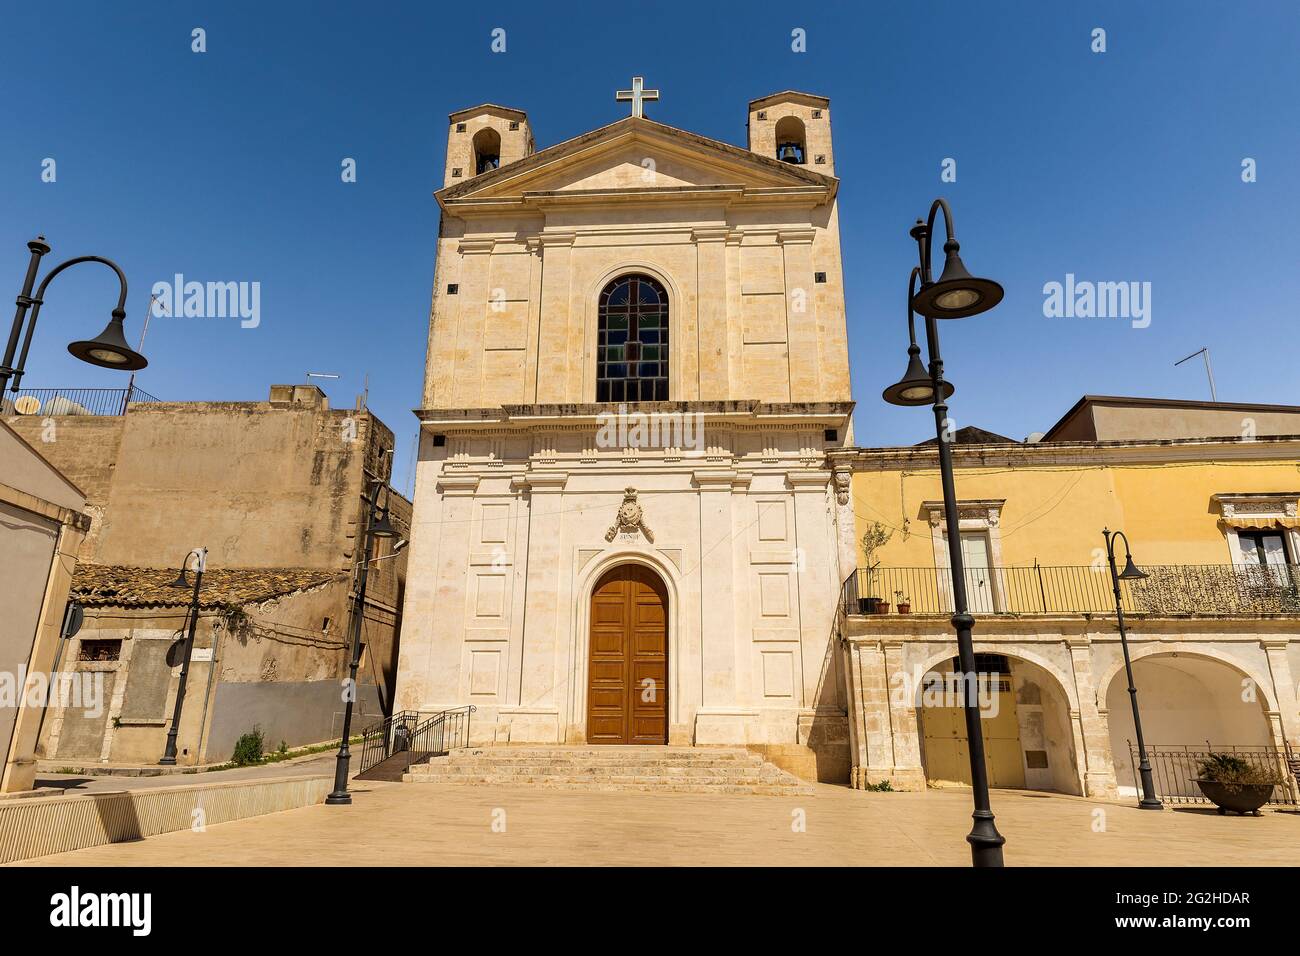 Main Facade of Parish of the Immaculate Heart of Mary (Parocchia Sacro Cuore Immacolato di Maria) in Rosolini, Province of Syracuse, Sicily, Italy. Stock Photo